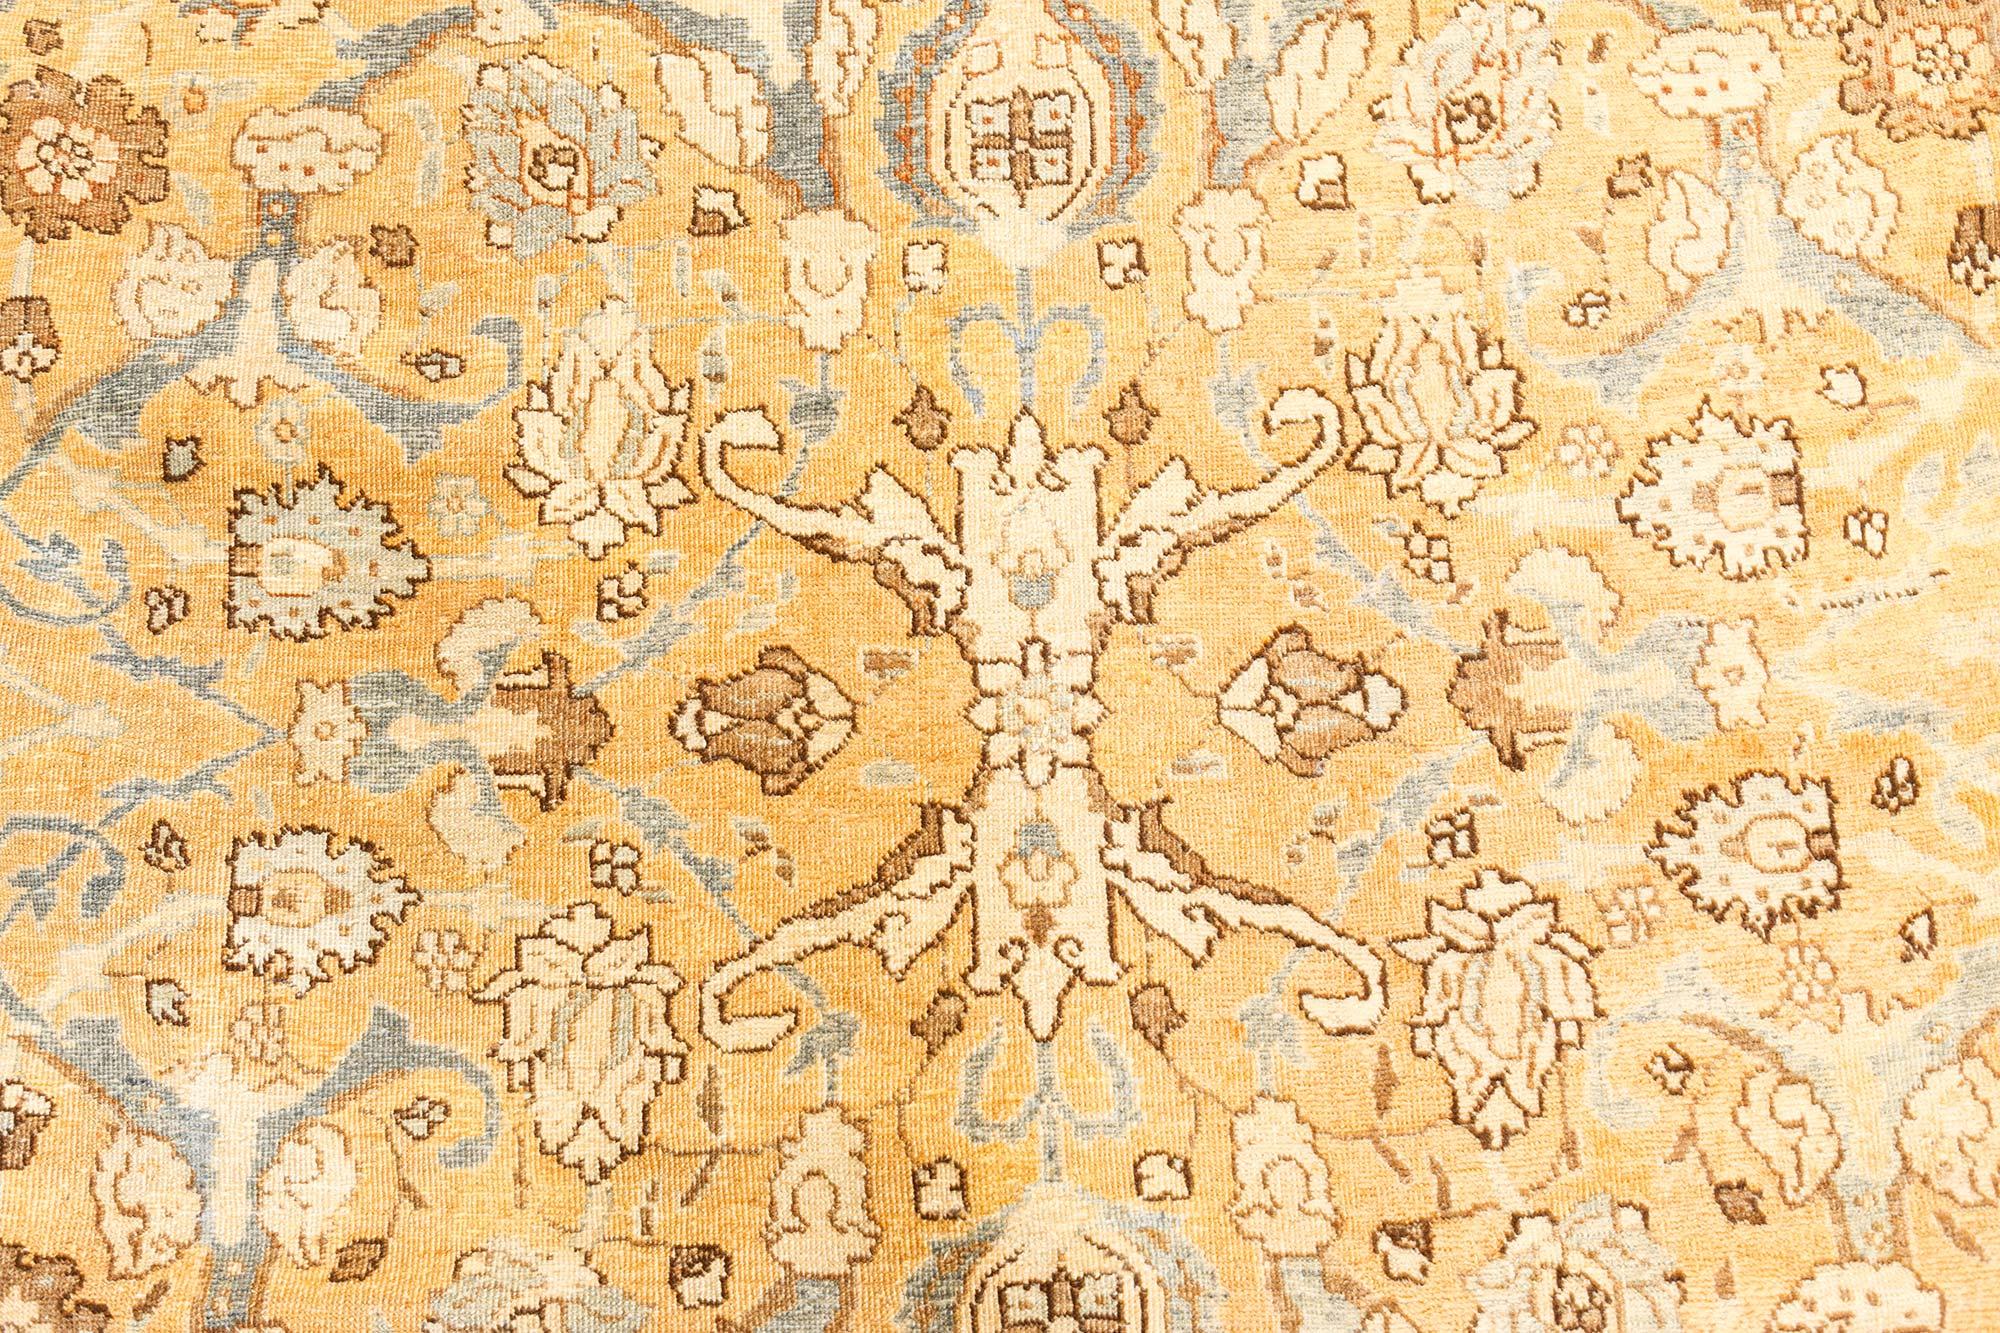 Authentic Persian Khorassan orange, yellow handmade wool rug
Size: 10'2